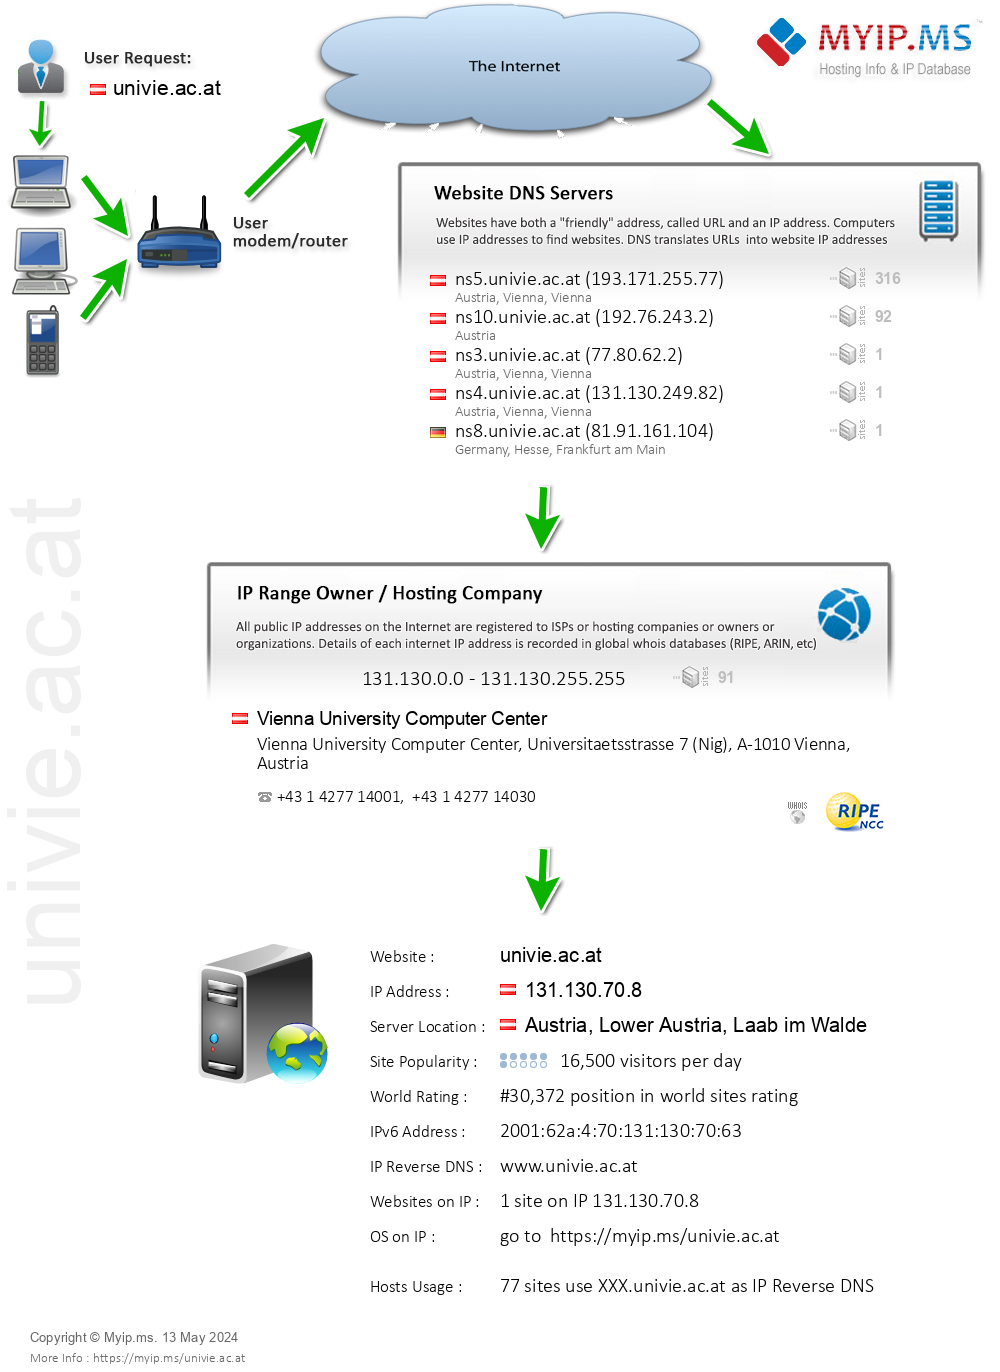 Univie.ac.at - Website Hosting Visual IP Diagram